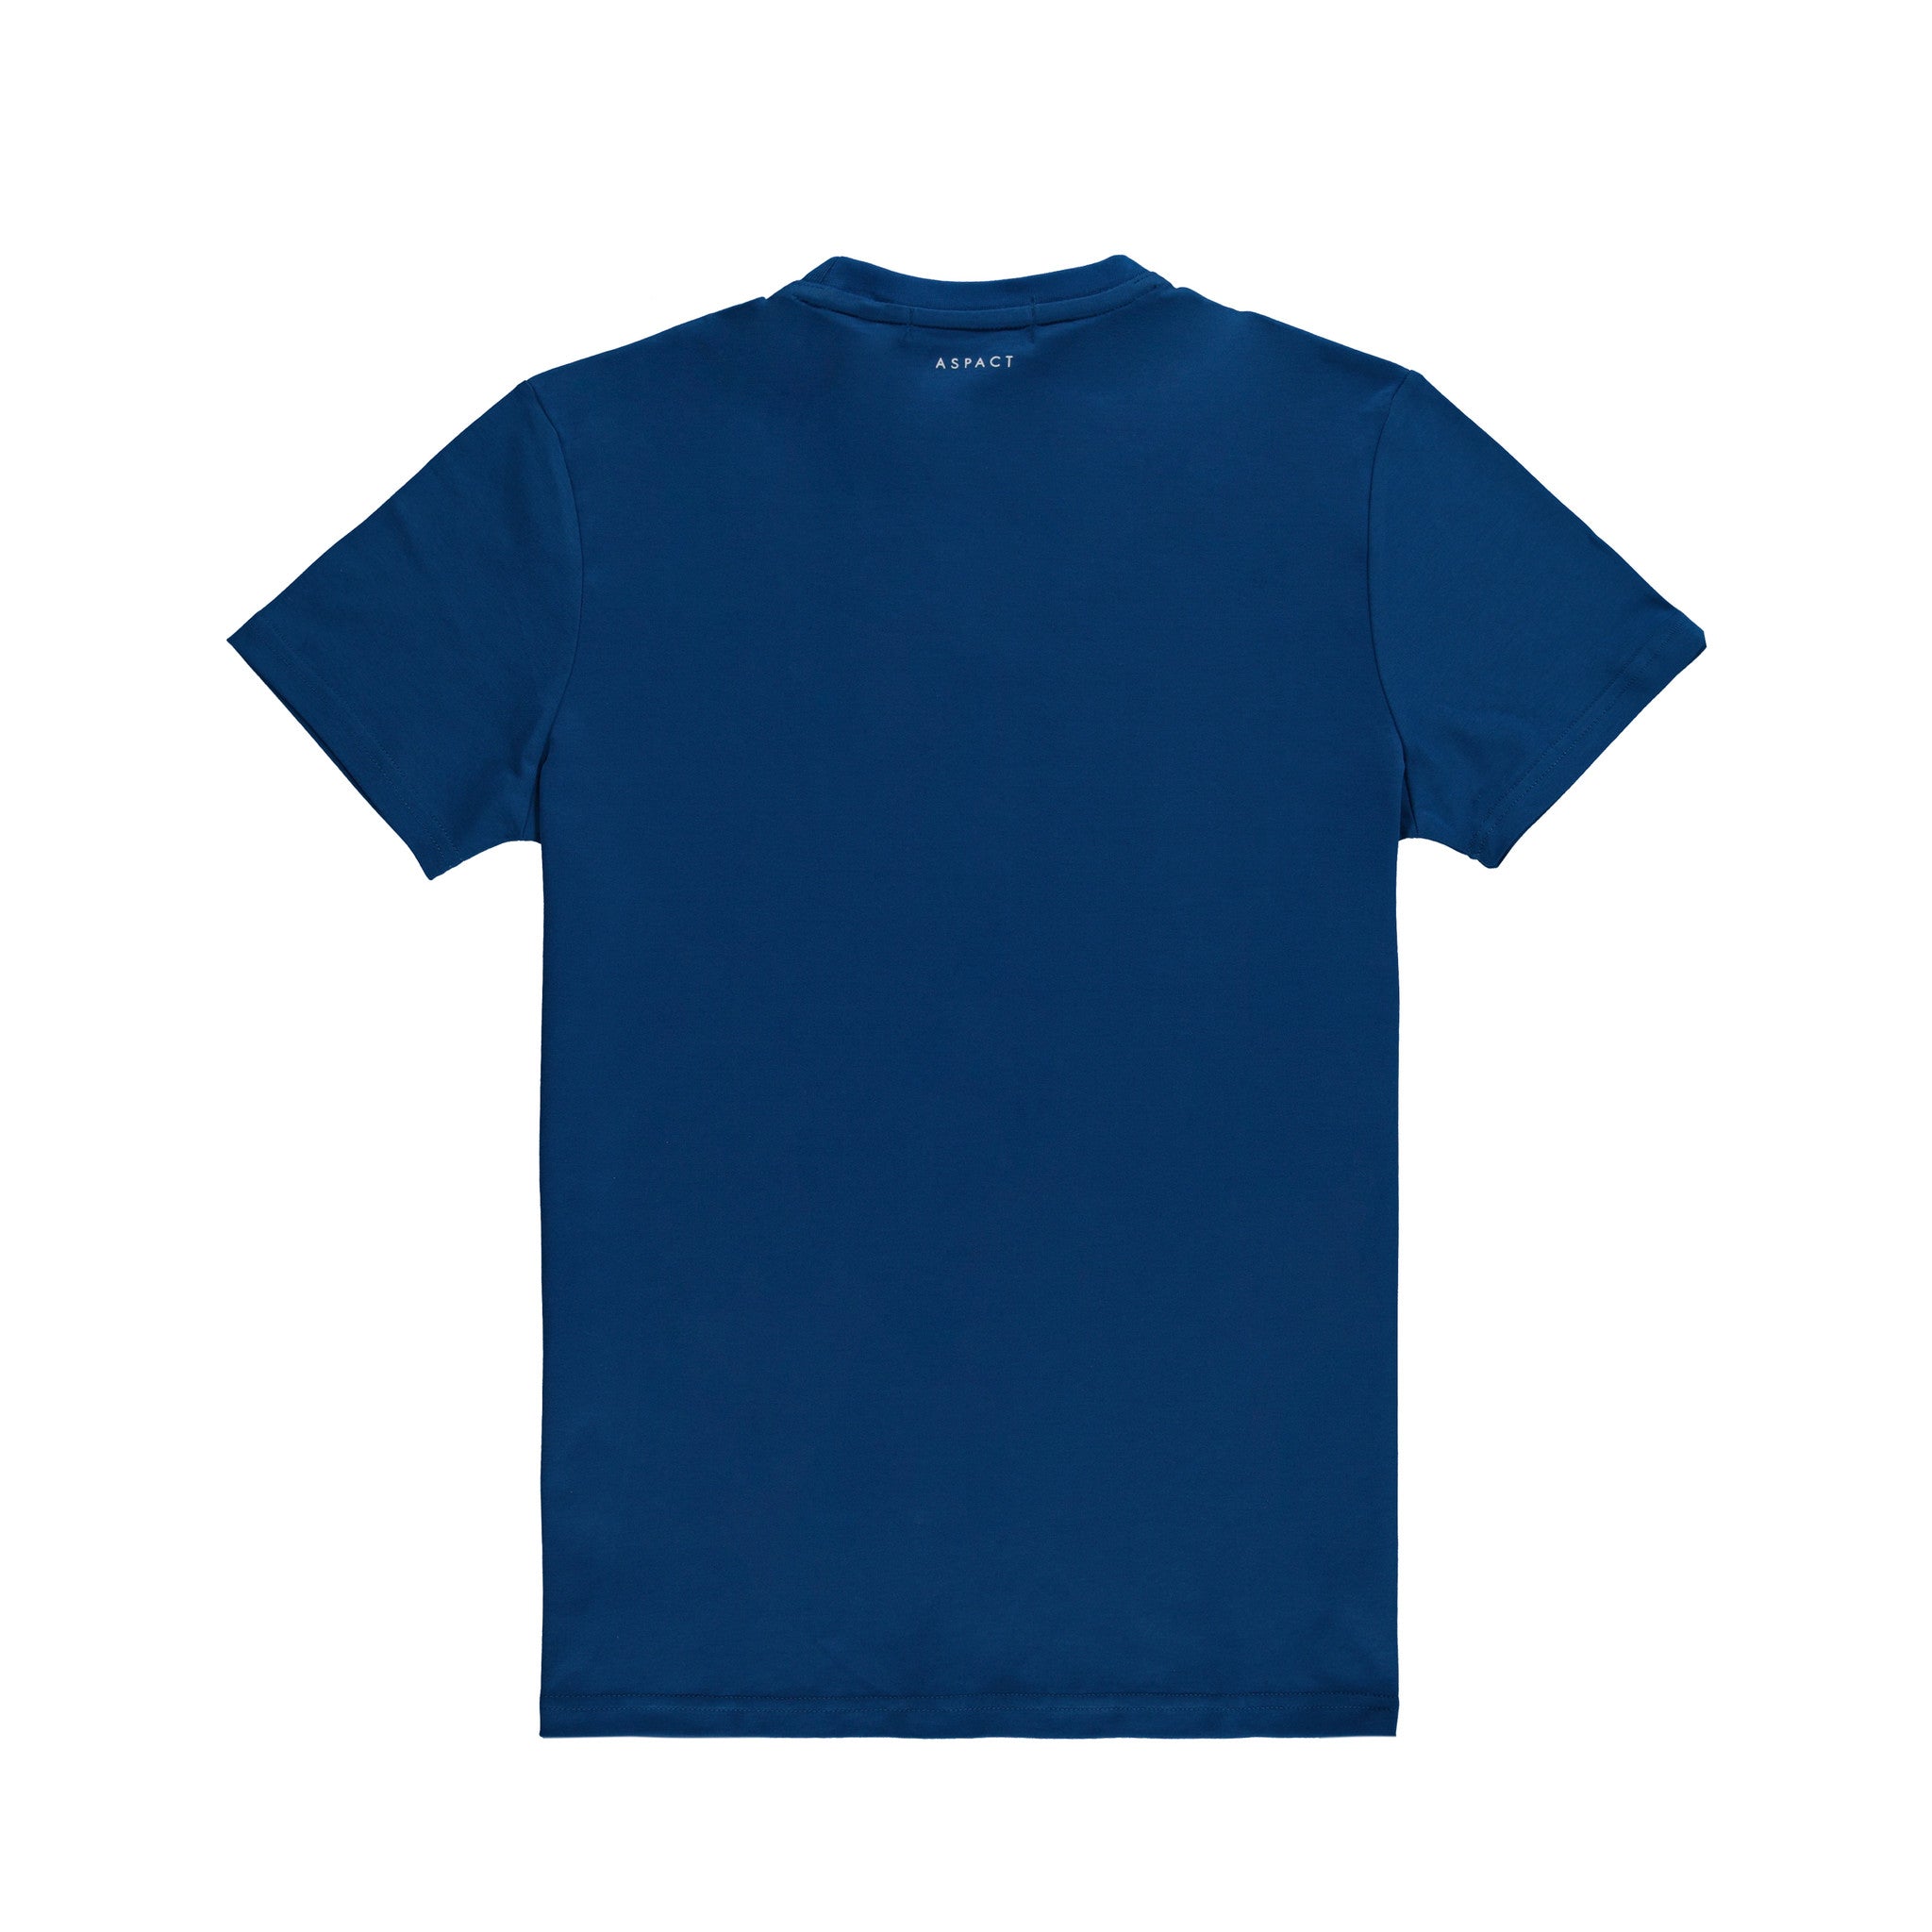 Aspact Madrid T-Shirt Blauw